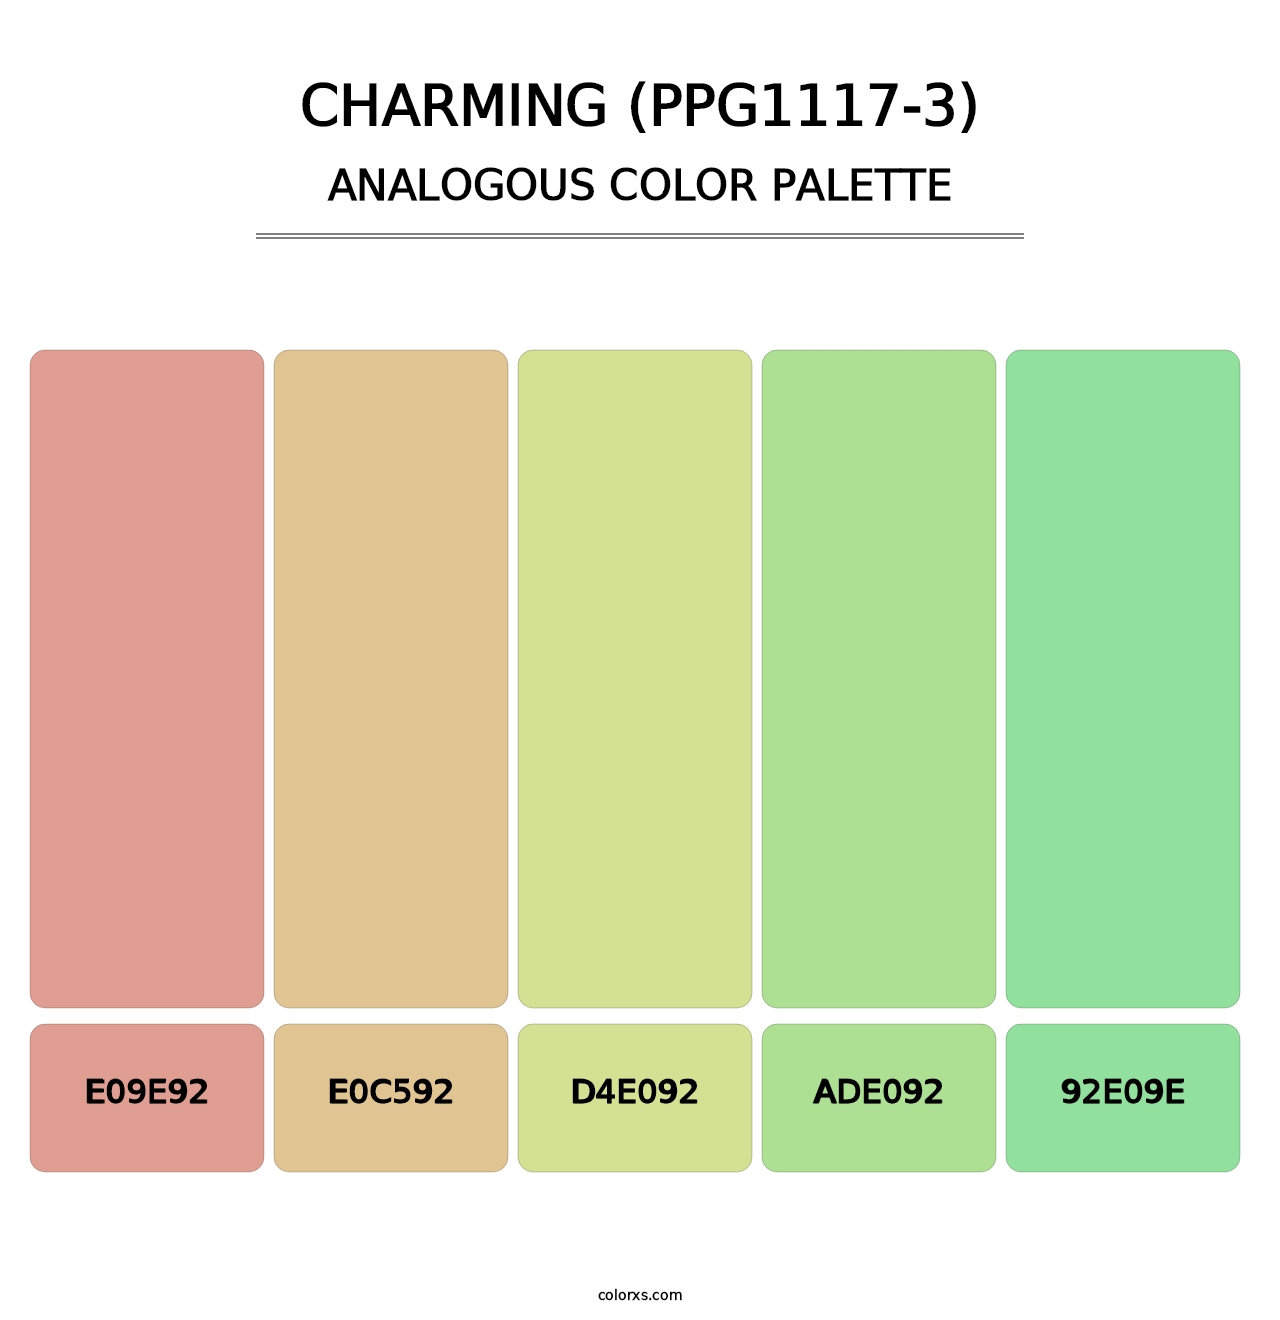 Charming (PPG1117-3) - Analogous Color Palette